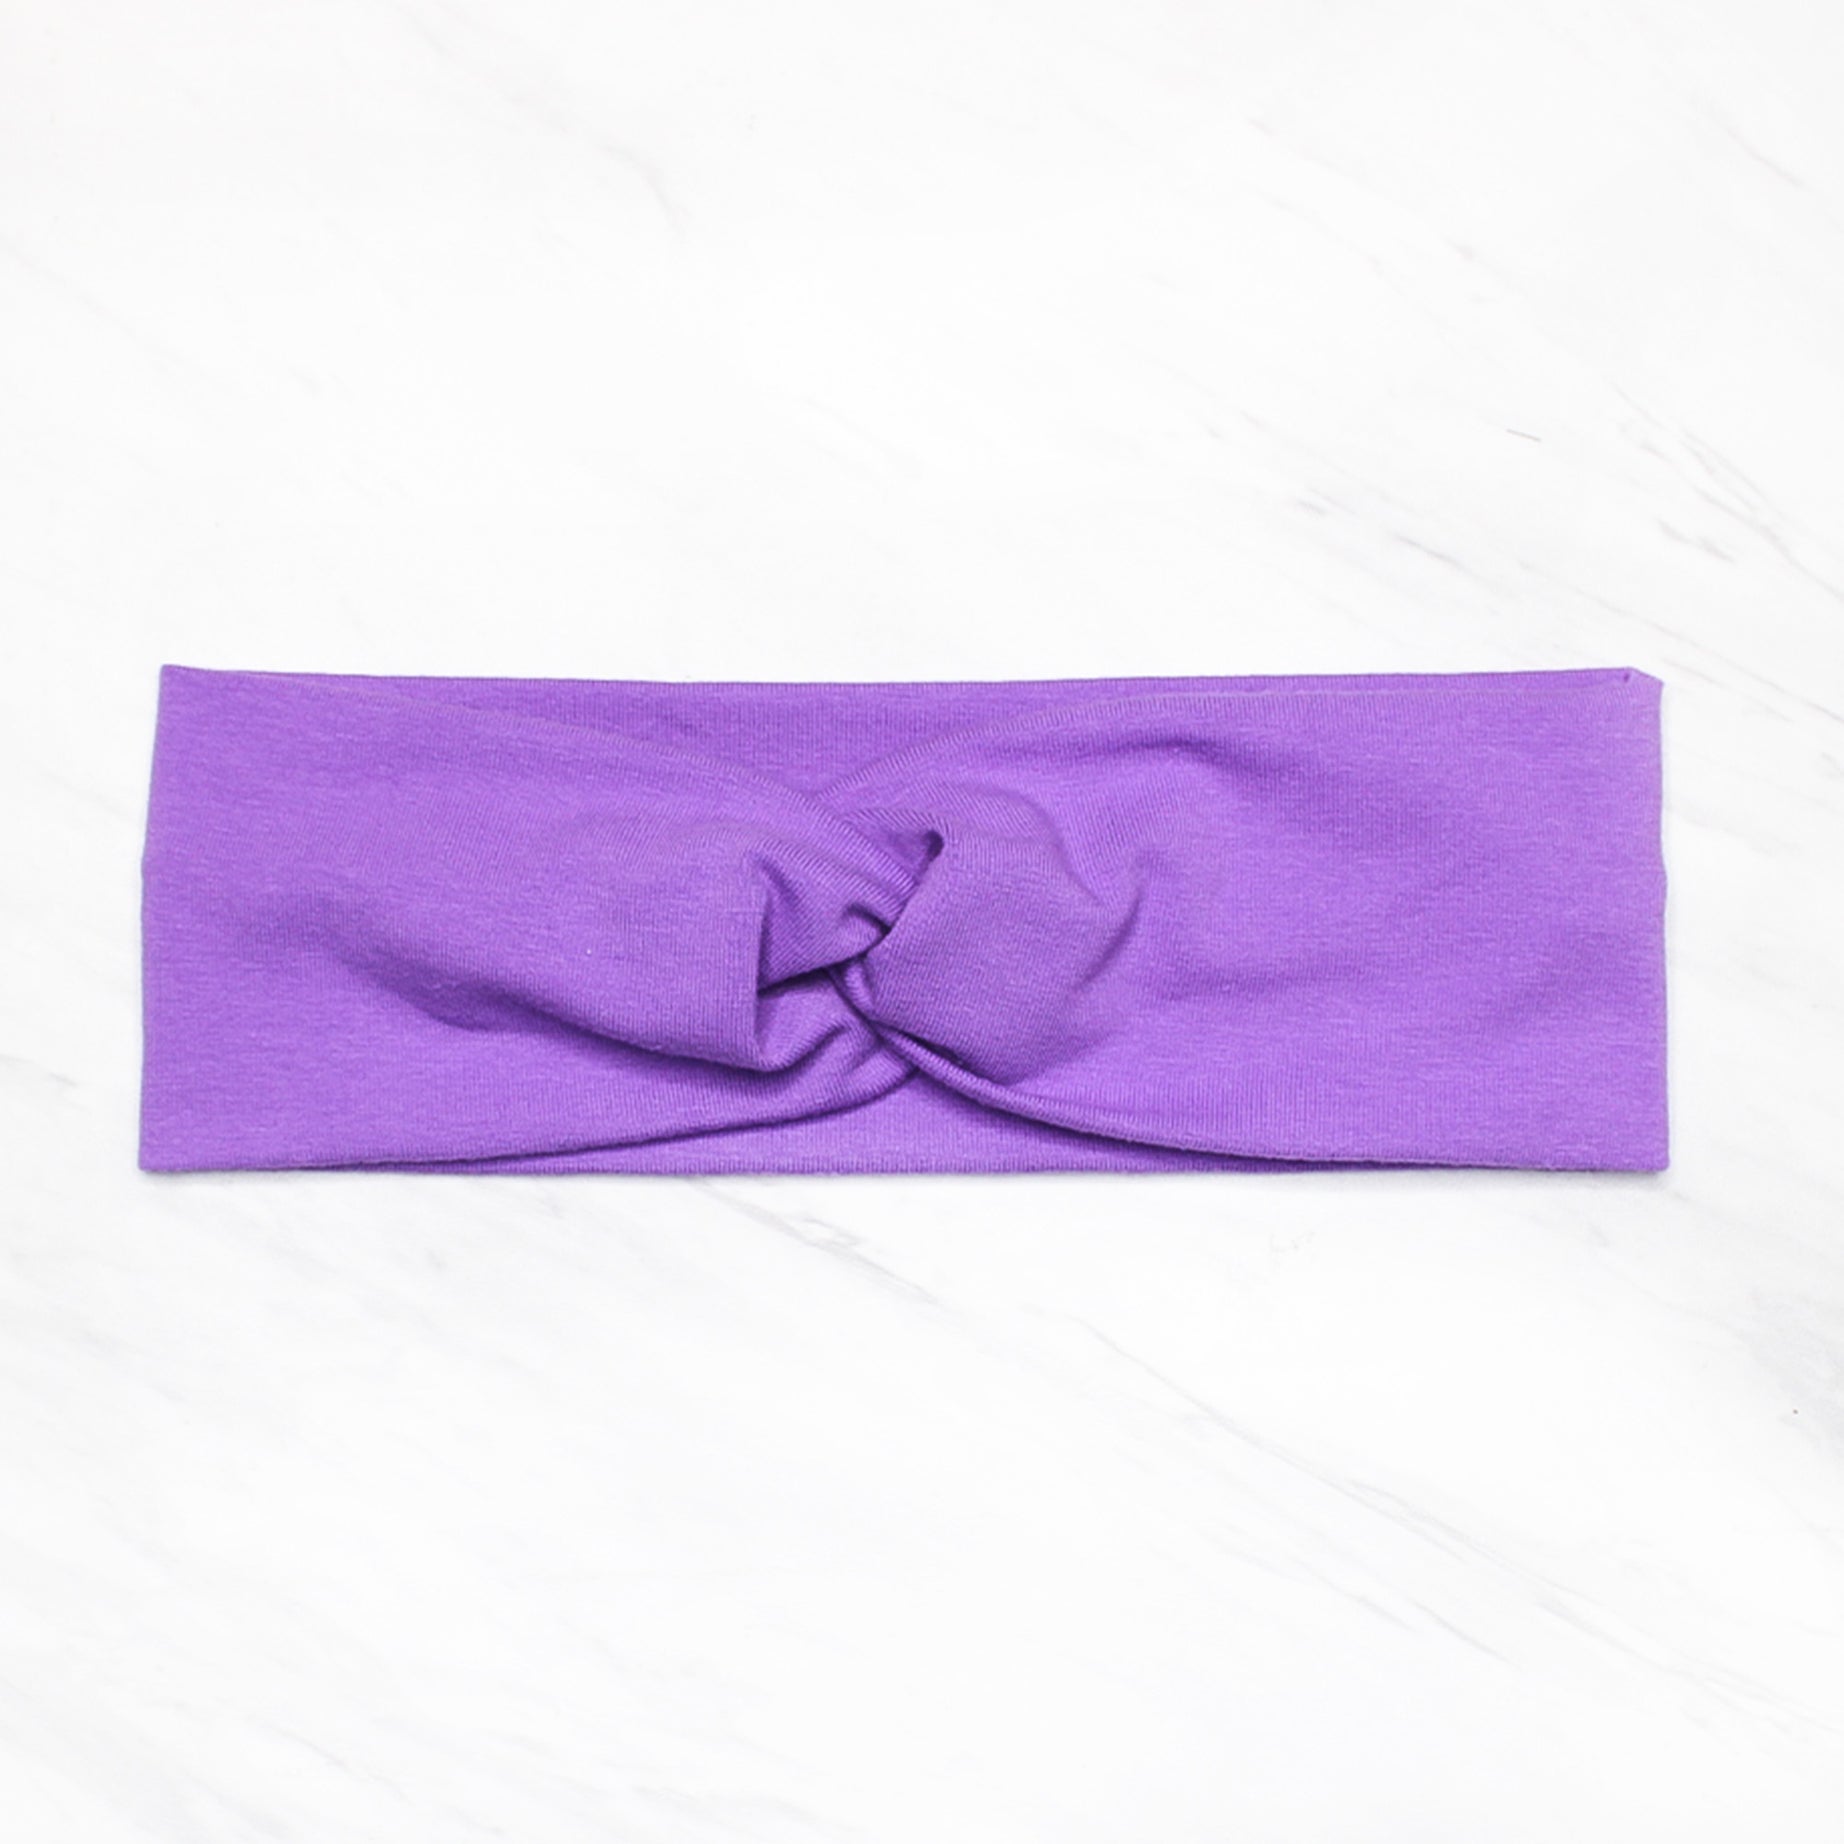 Solid Lavender Purple Headband, Cotton Spandex